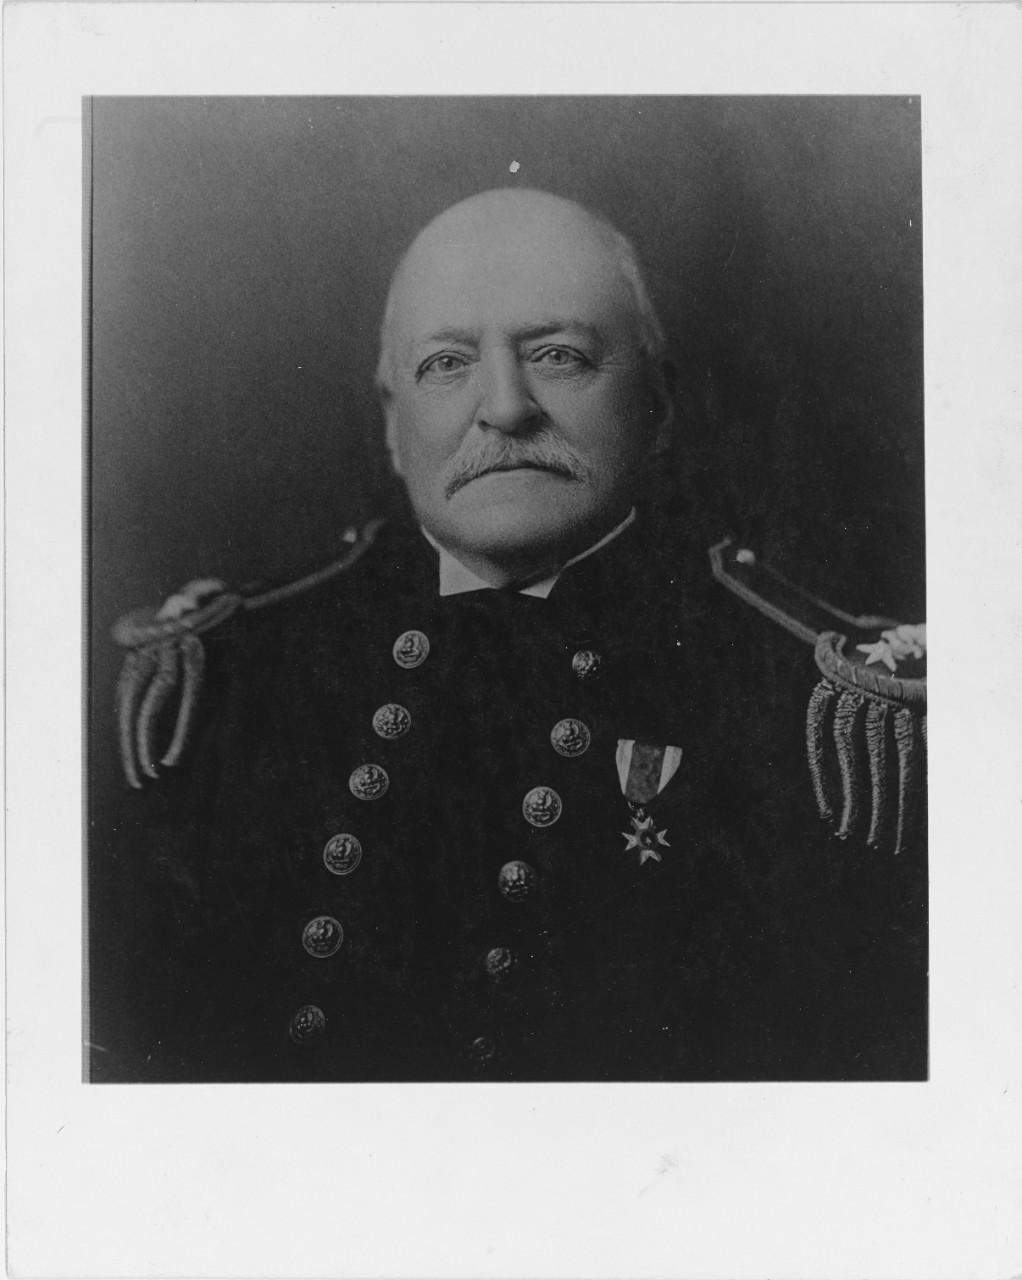  NH 41904  Rear Admiral George H. Wadleigh, USN